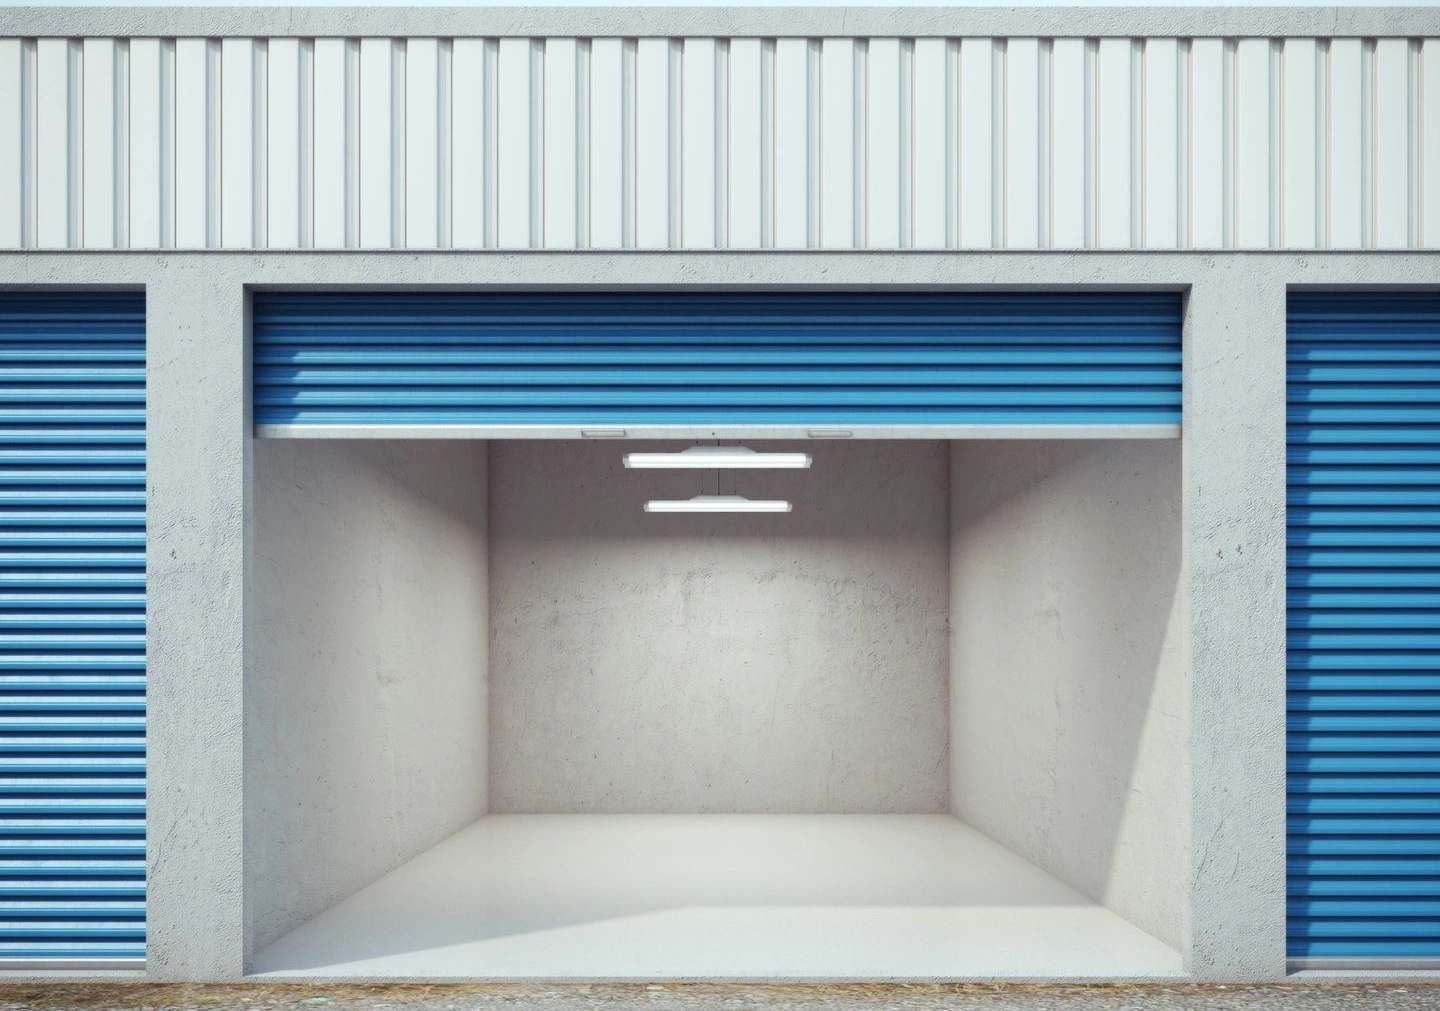 A garage door opened to show the inside.